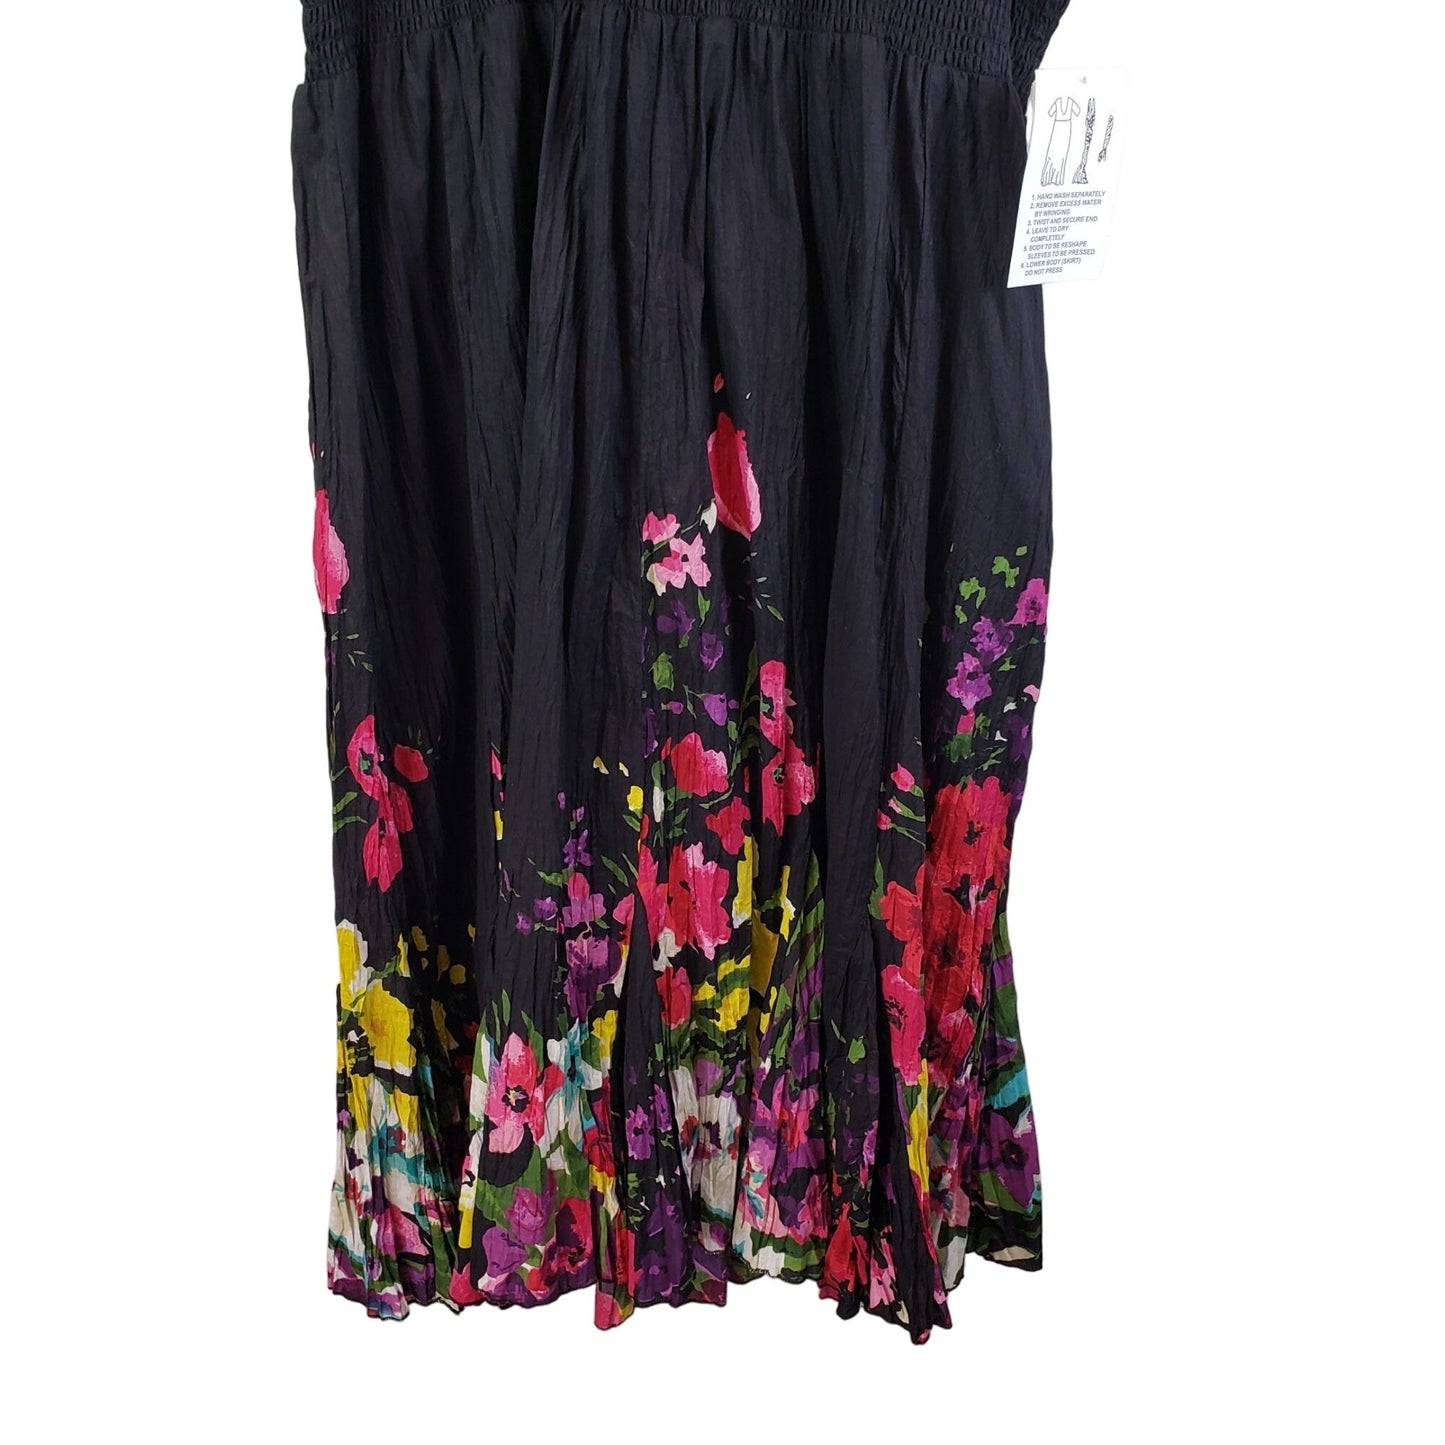 NWT Draper's & Damon's Smocked Floral Godet Midi Dress Size 2X